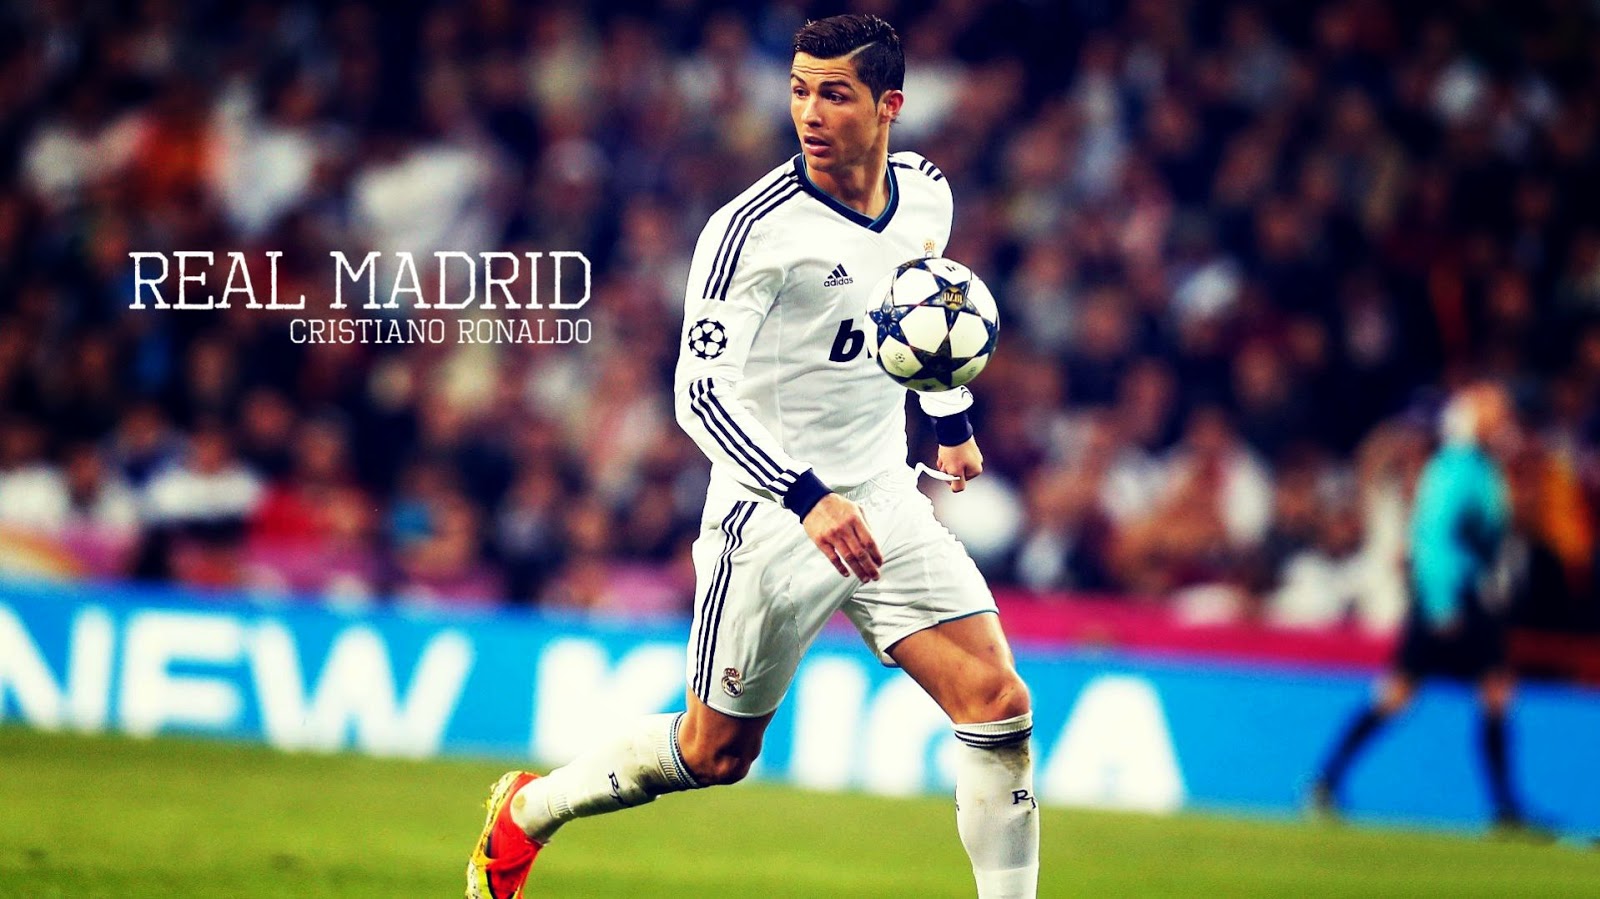 Ronaldo Real Madrid HD Wallpaper Cristiano